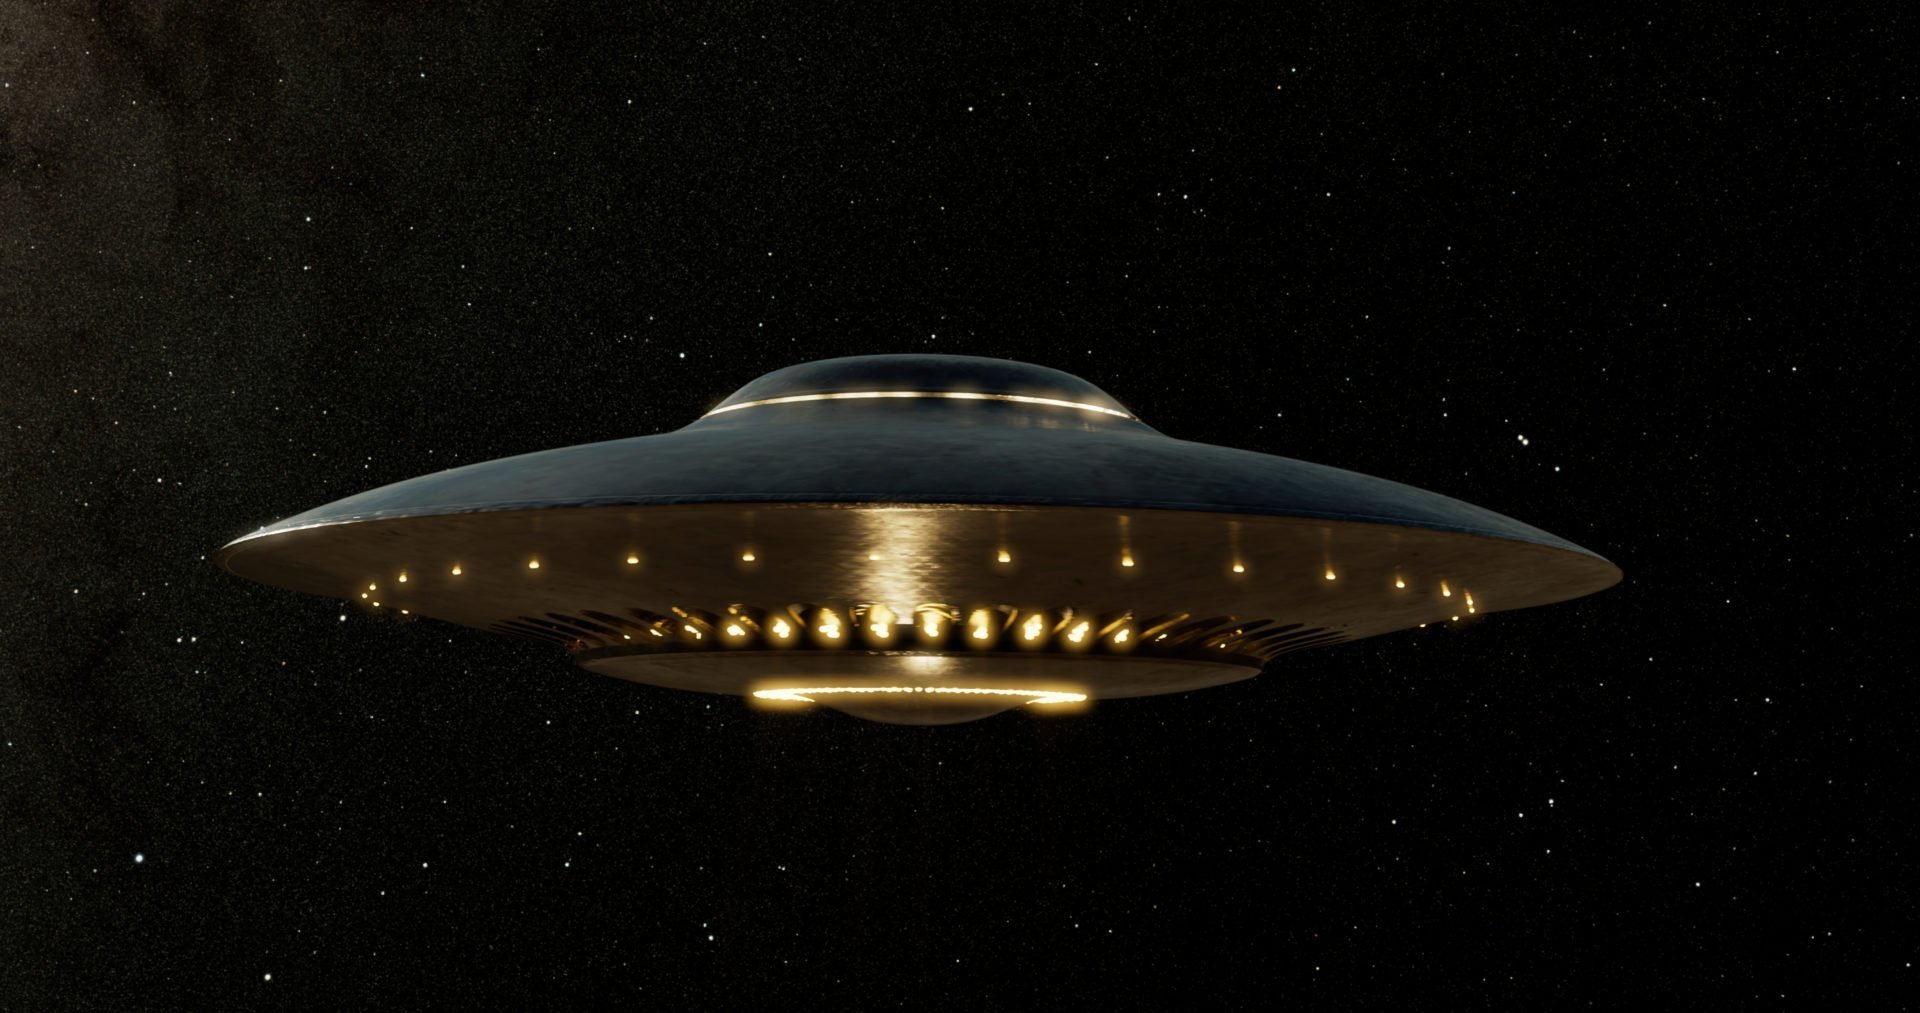 ‘UFO’ FLYING ACROSS DENVER CAPTURED ON A SECURITY CAMERA SPARKS CURIOSITY